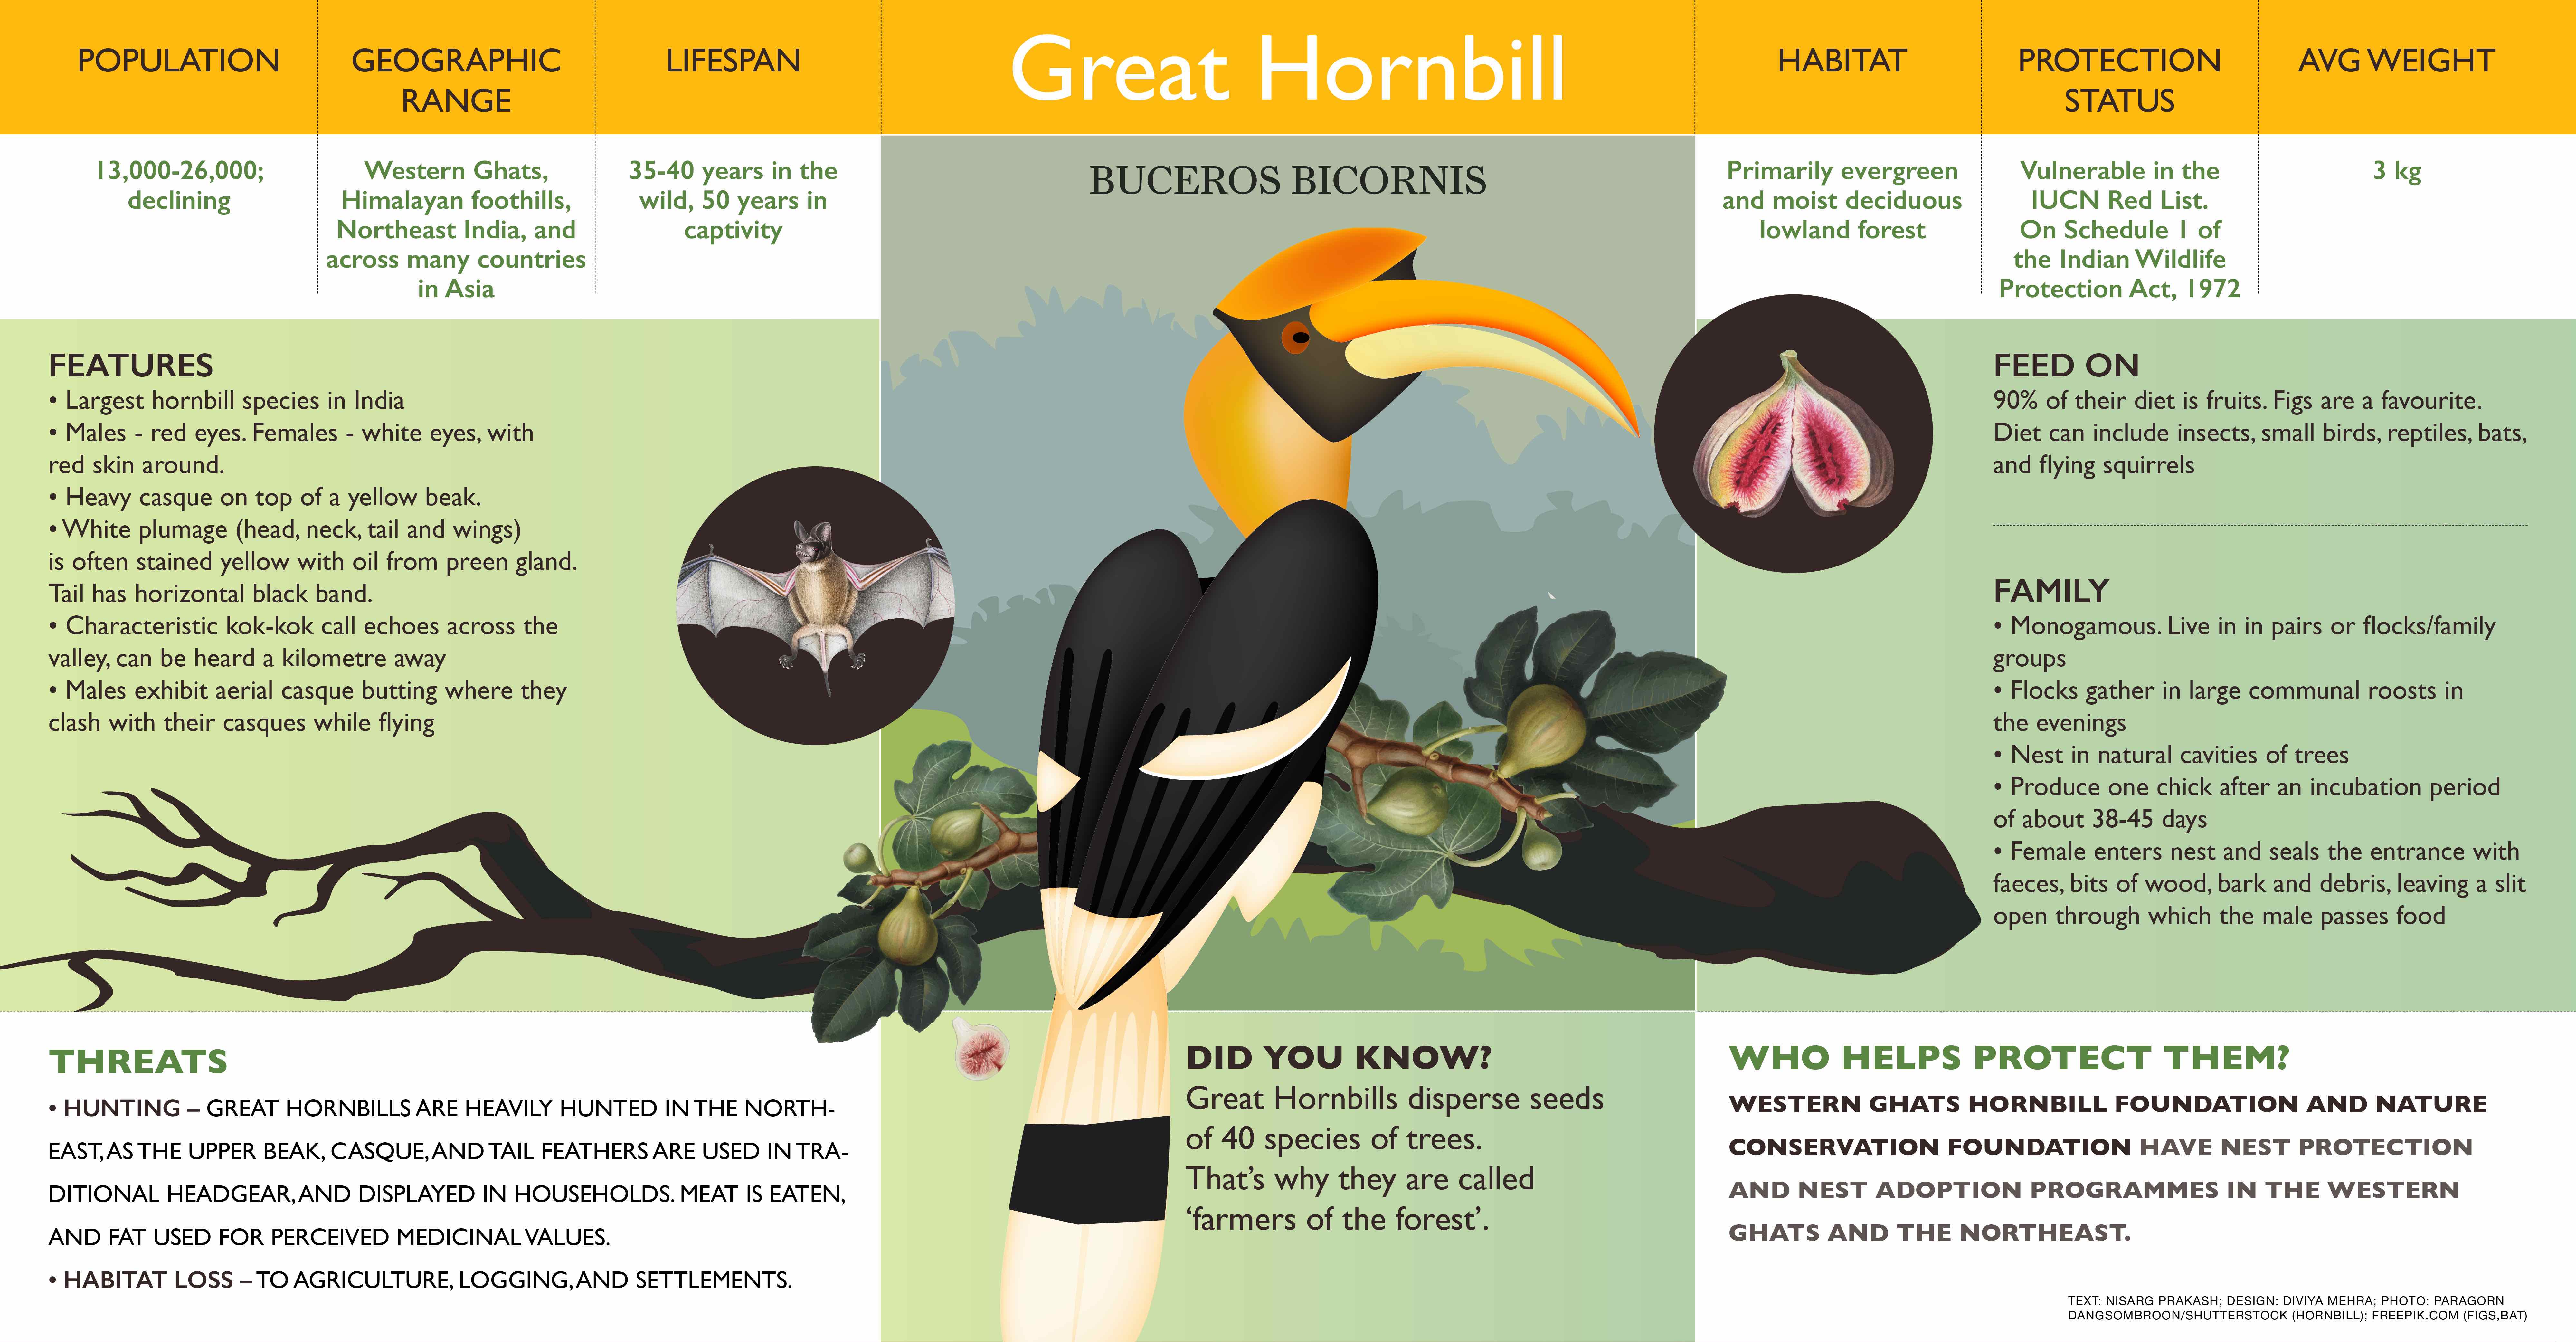 great hornbill flying in groups